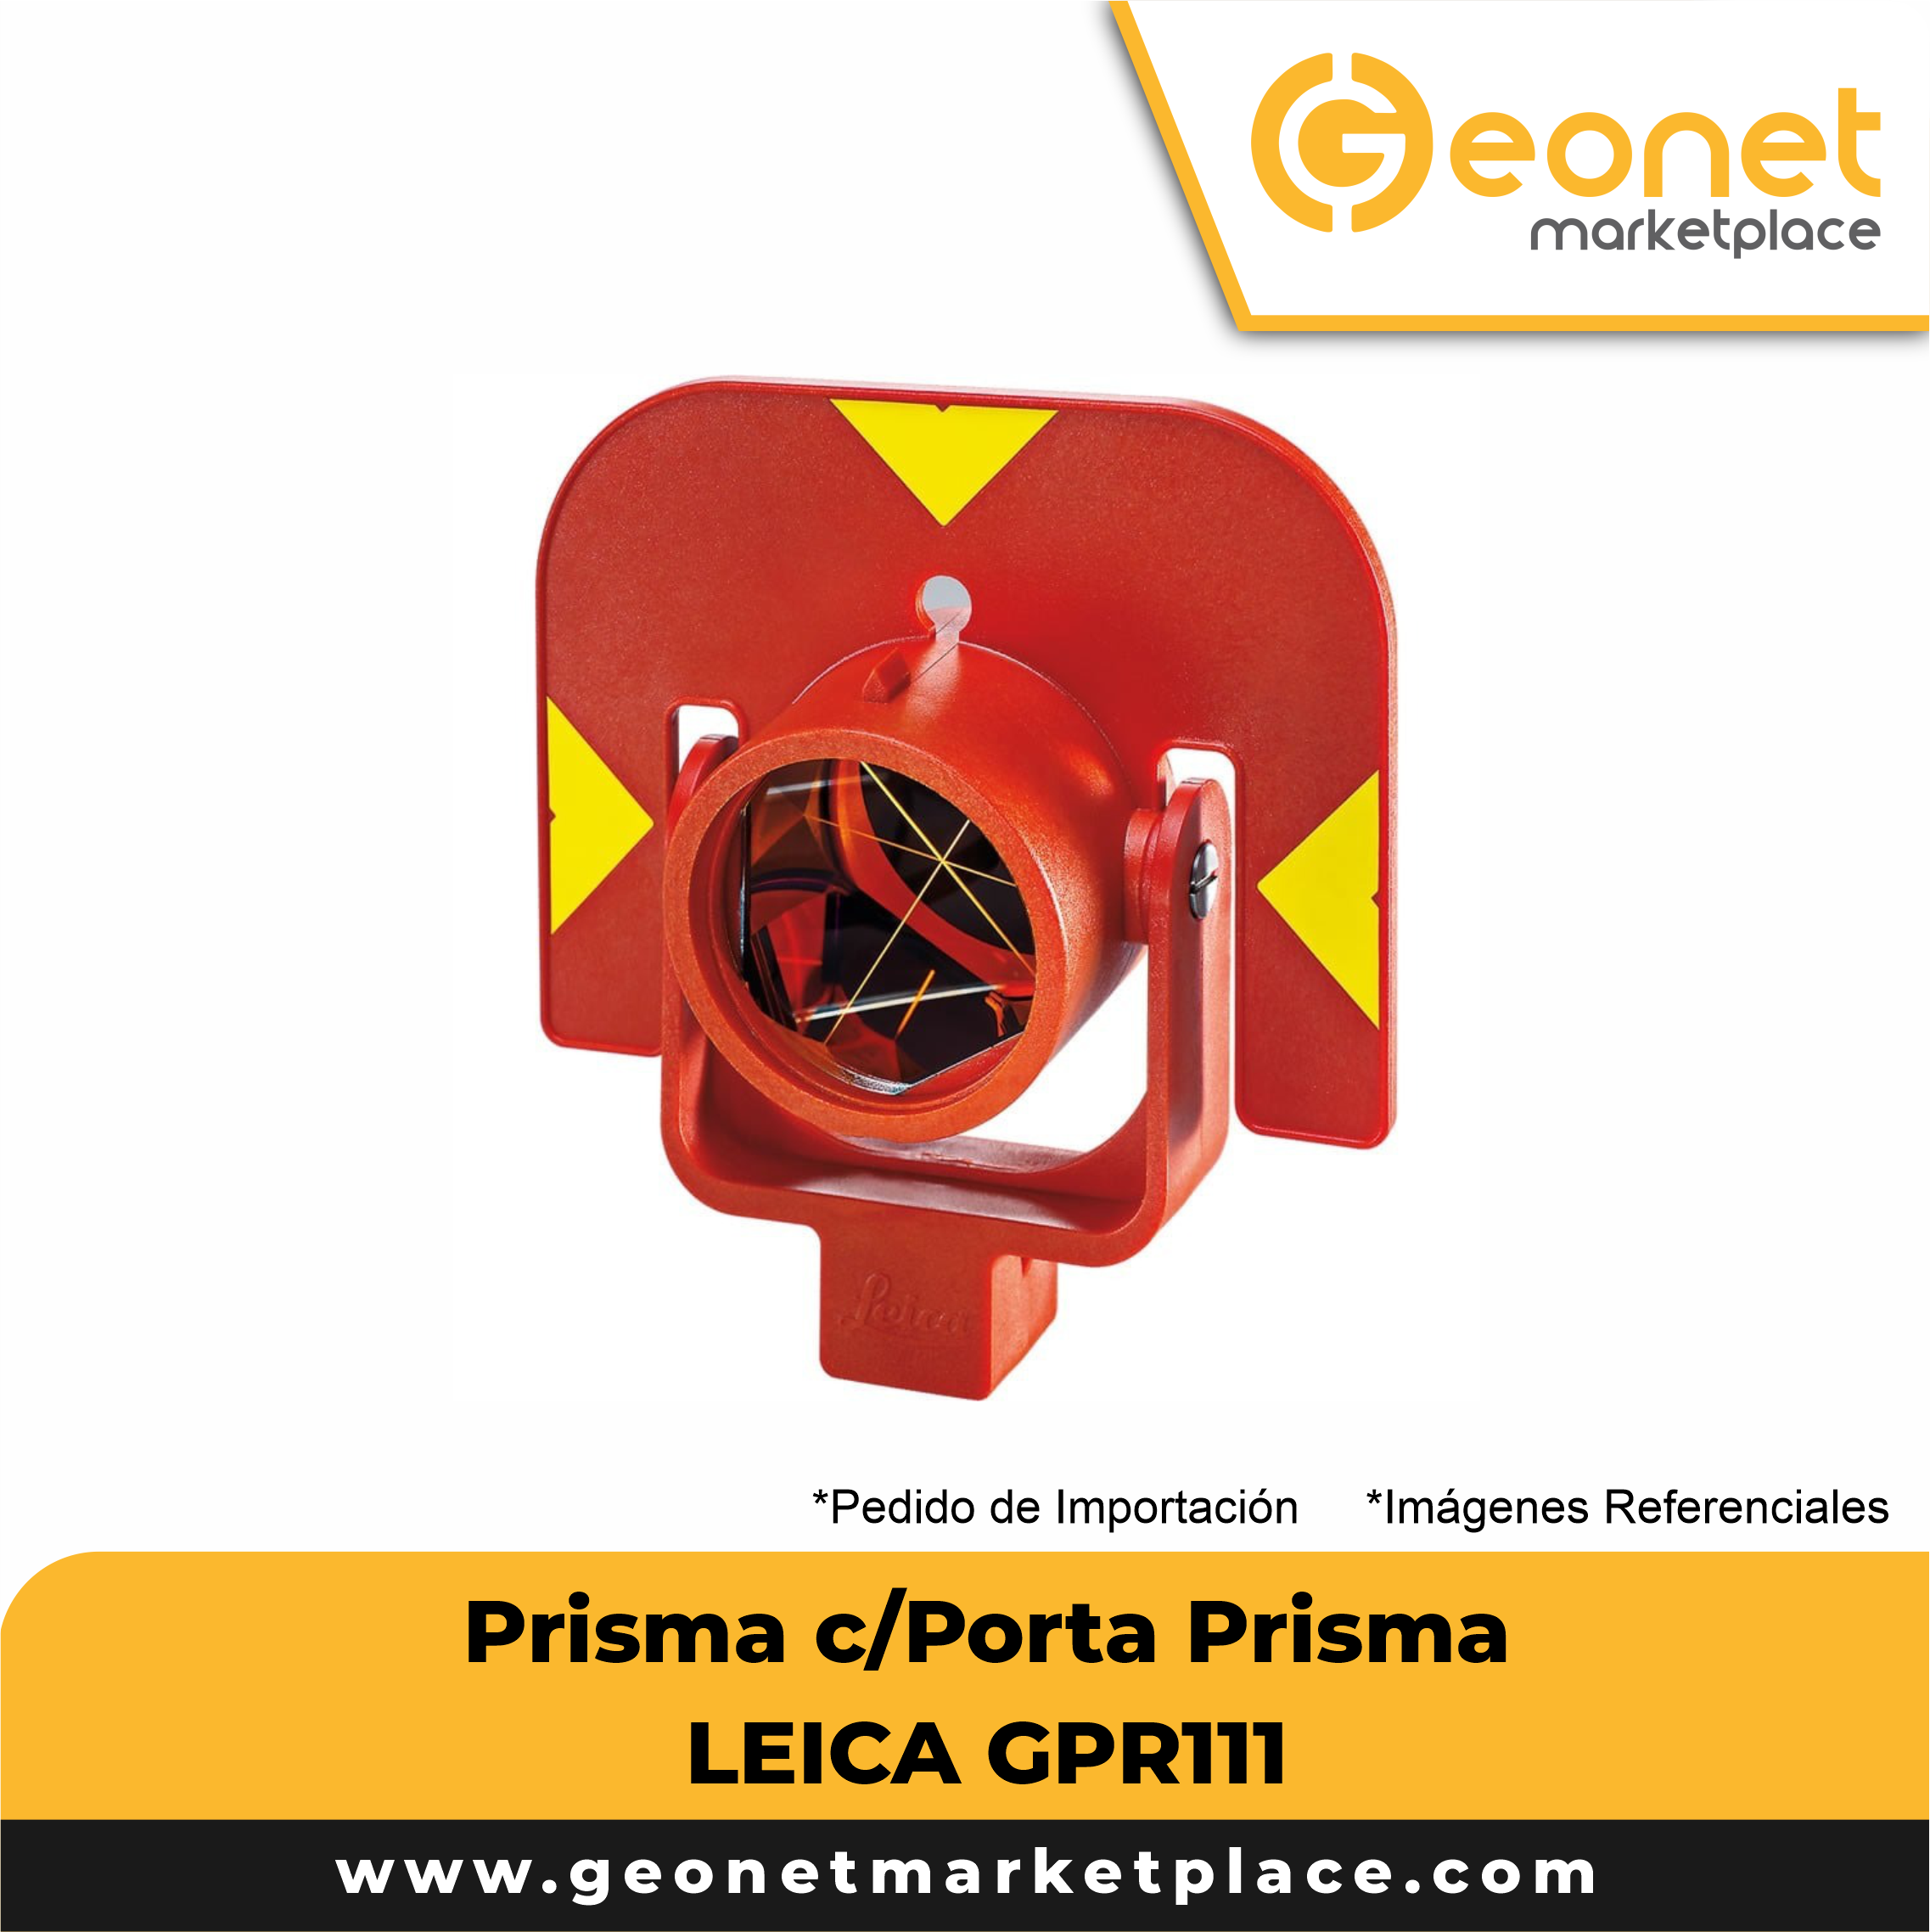 Prisma c/Porta prisma LEICA GPR111